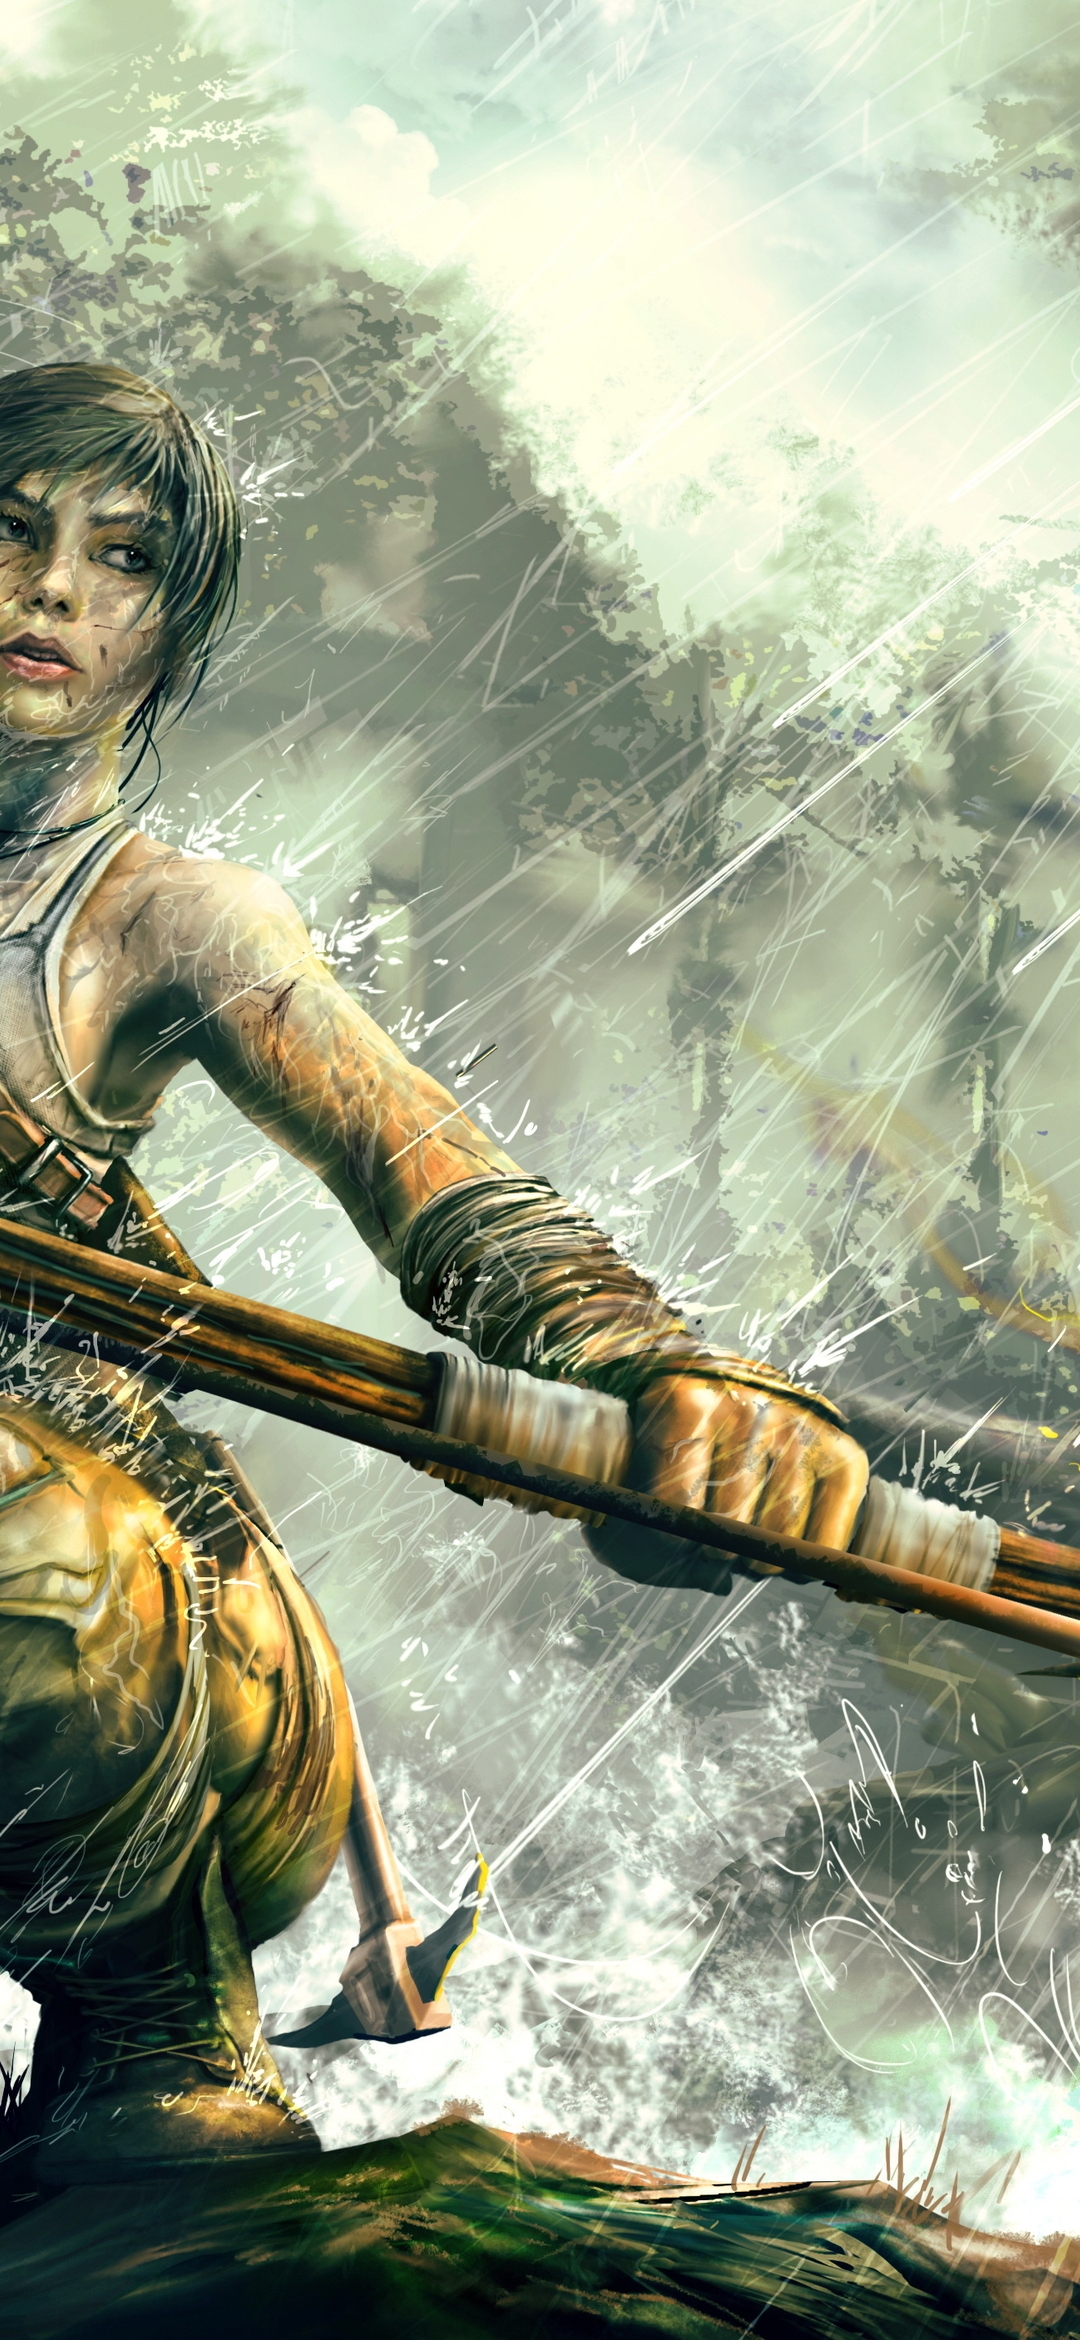 Картинка: Rise of the Tomb Raider, Lara Croft, волки, дождь, лук, стрелы